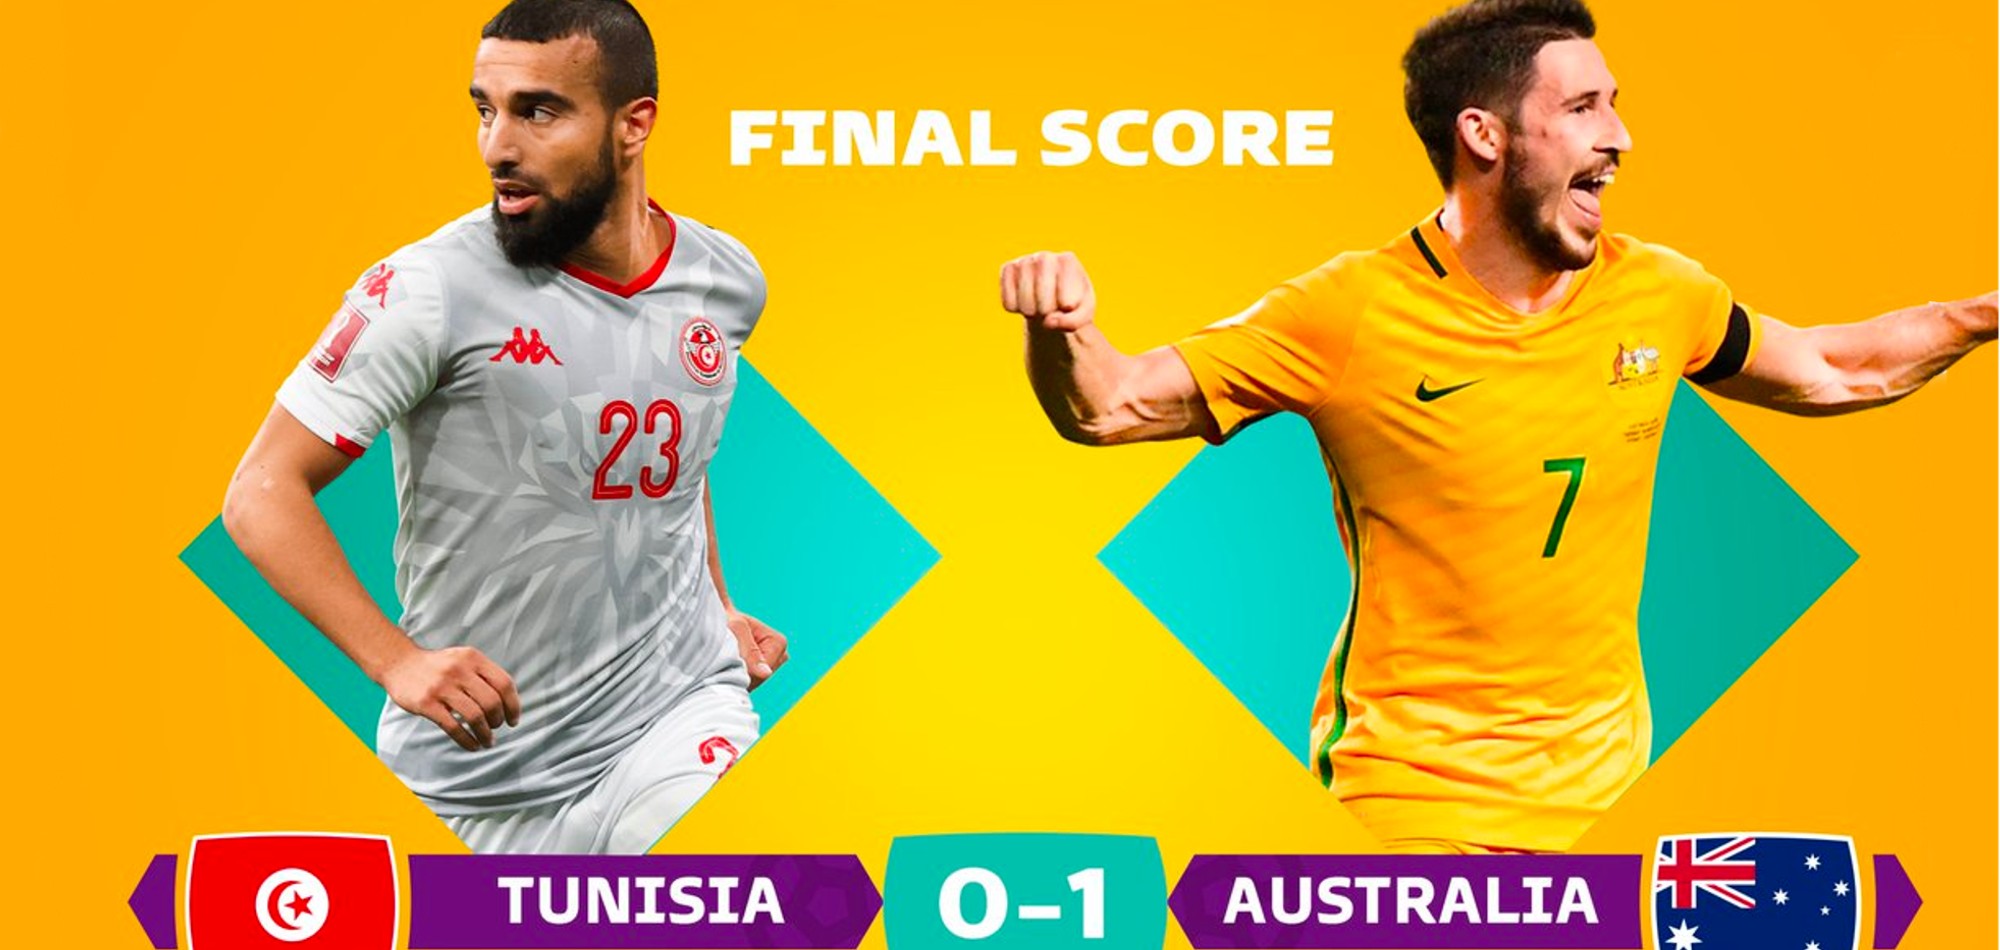 Australia keep tournament hopes alive with win over Tunisia